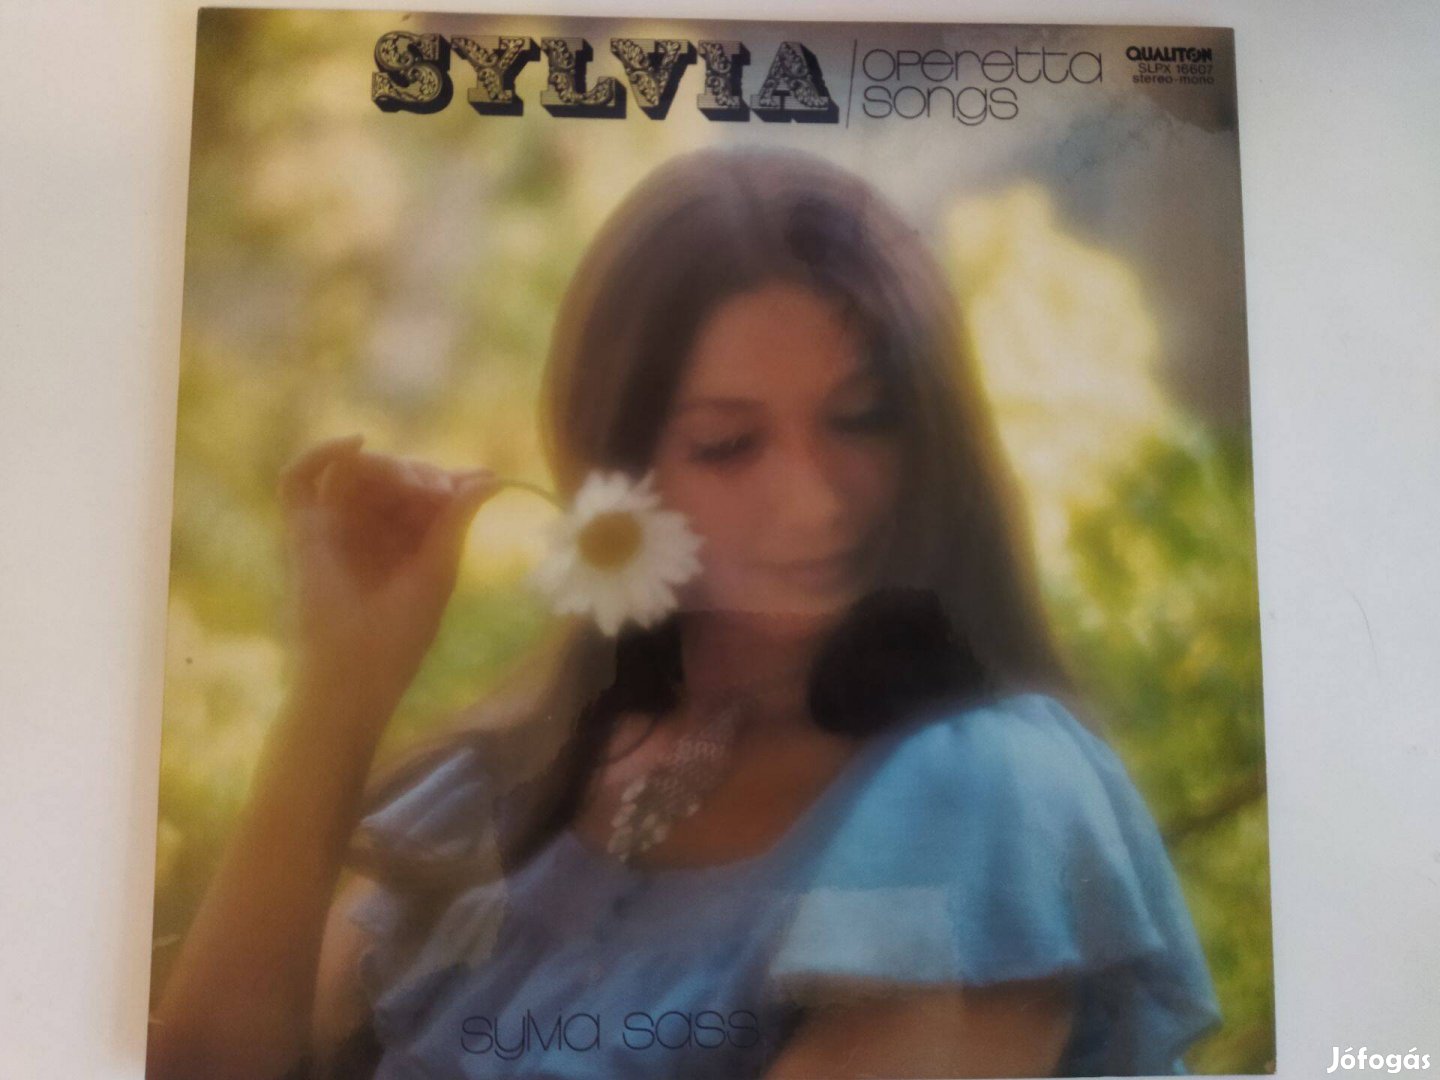 Sylvia Sass Operetta songs